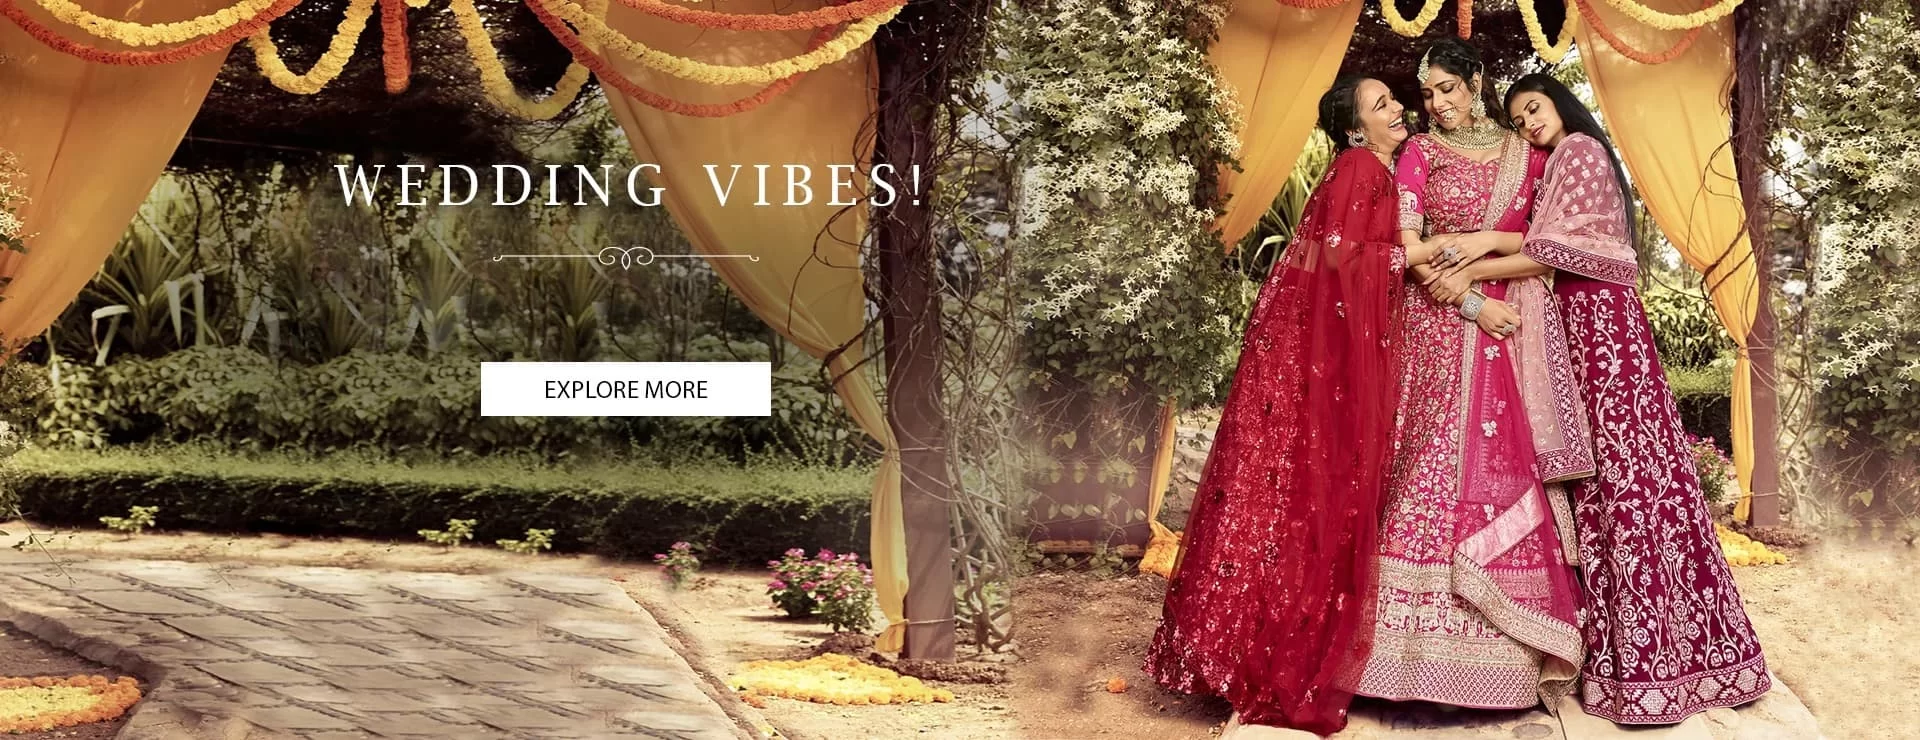 Pakistani Wedding Dresses For Brides 1 Imanistudio.com